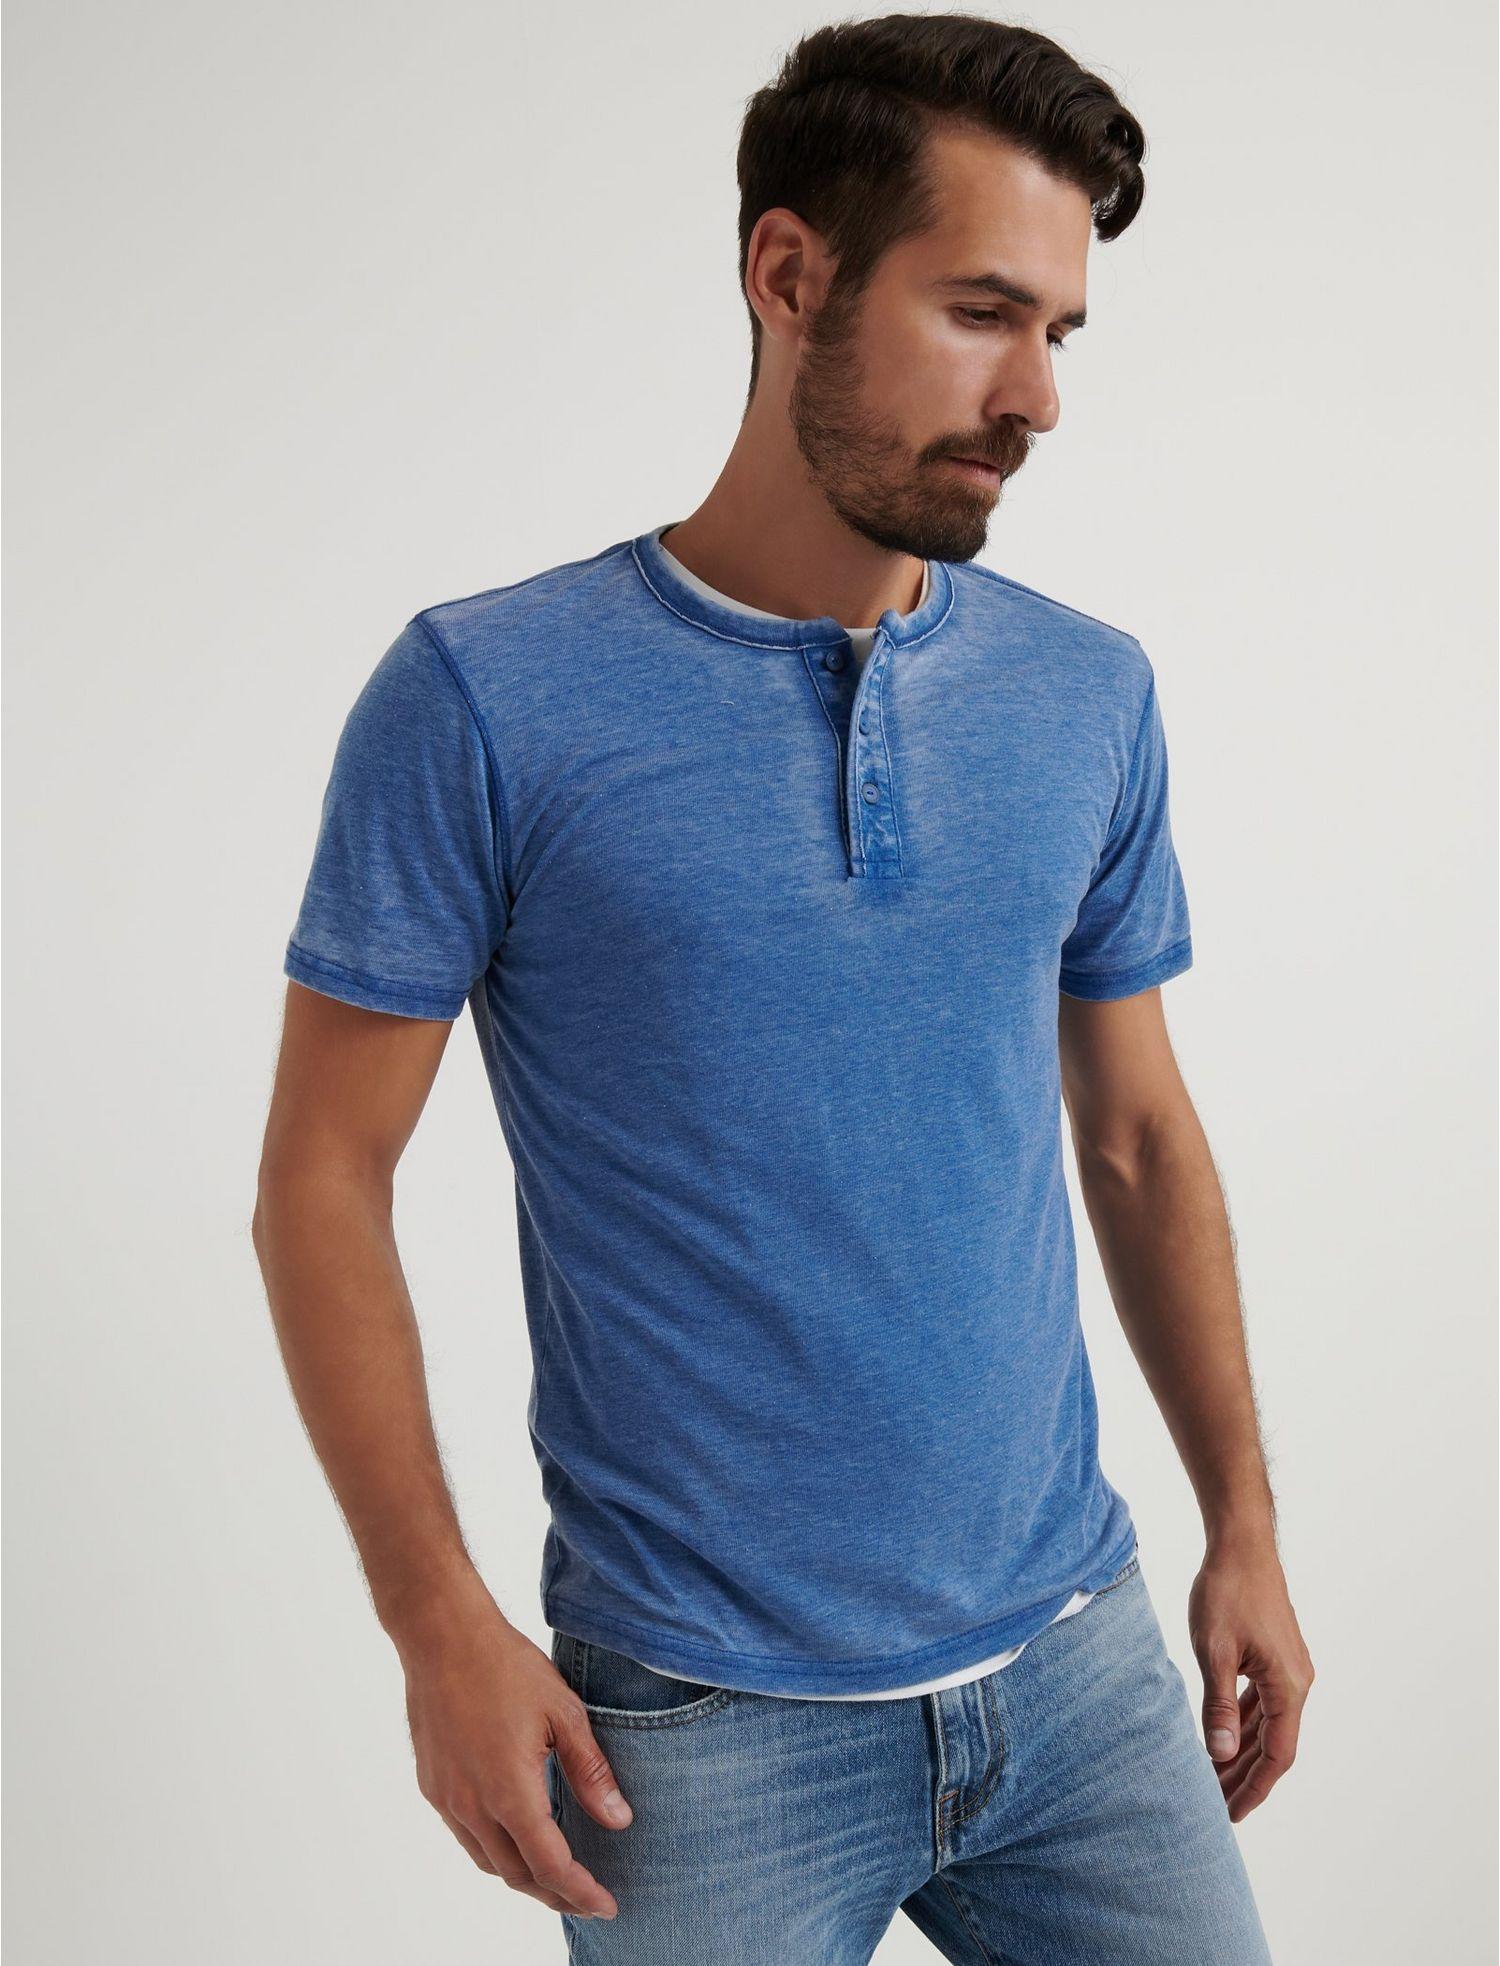 Lucky Brand Venice Burnout Henley Shirt in Blue for Men - Lyst